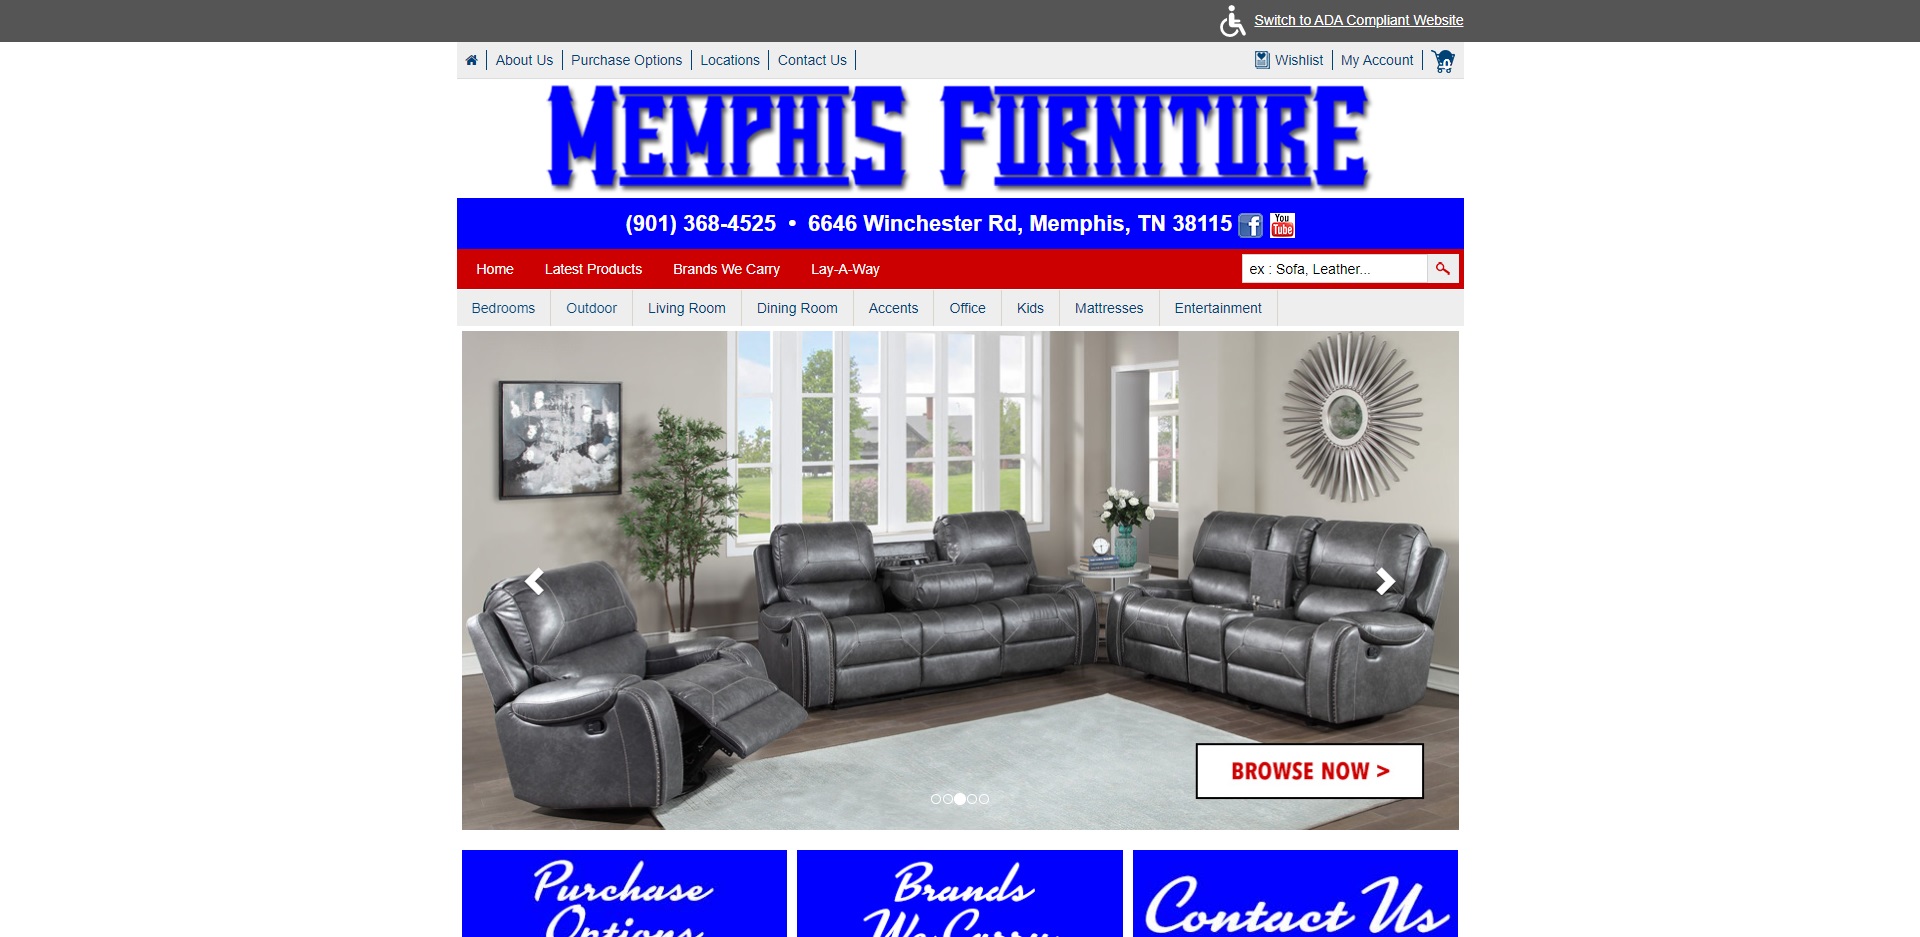 The Best Furniture in Memphis, TN